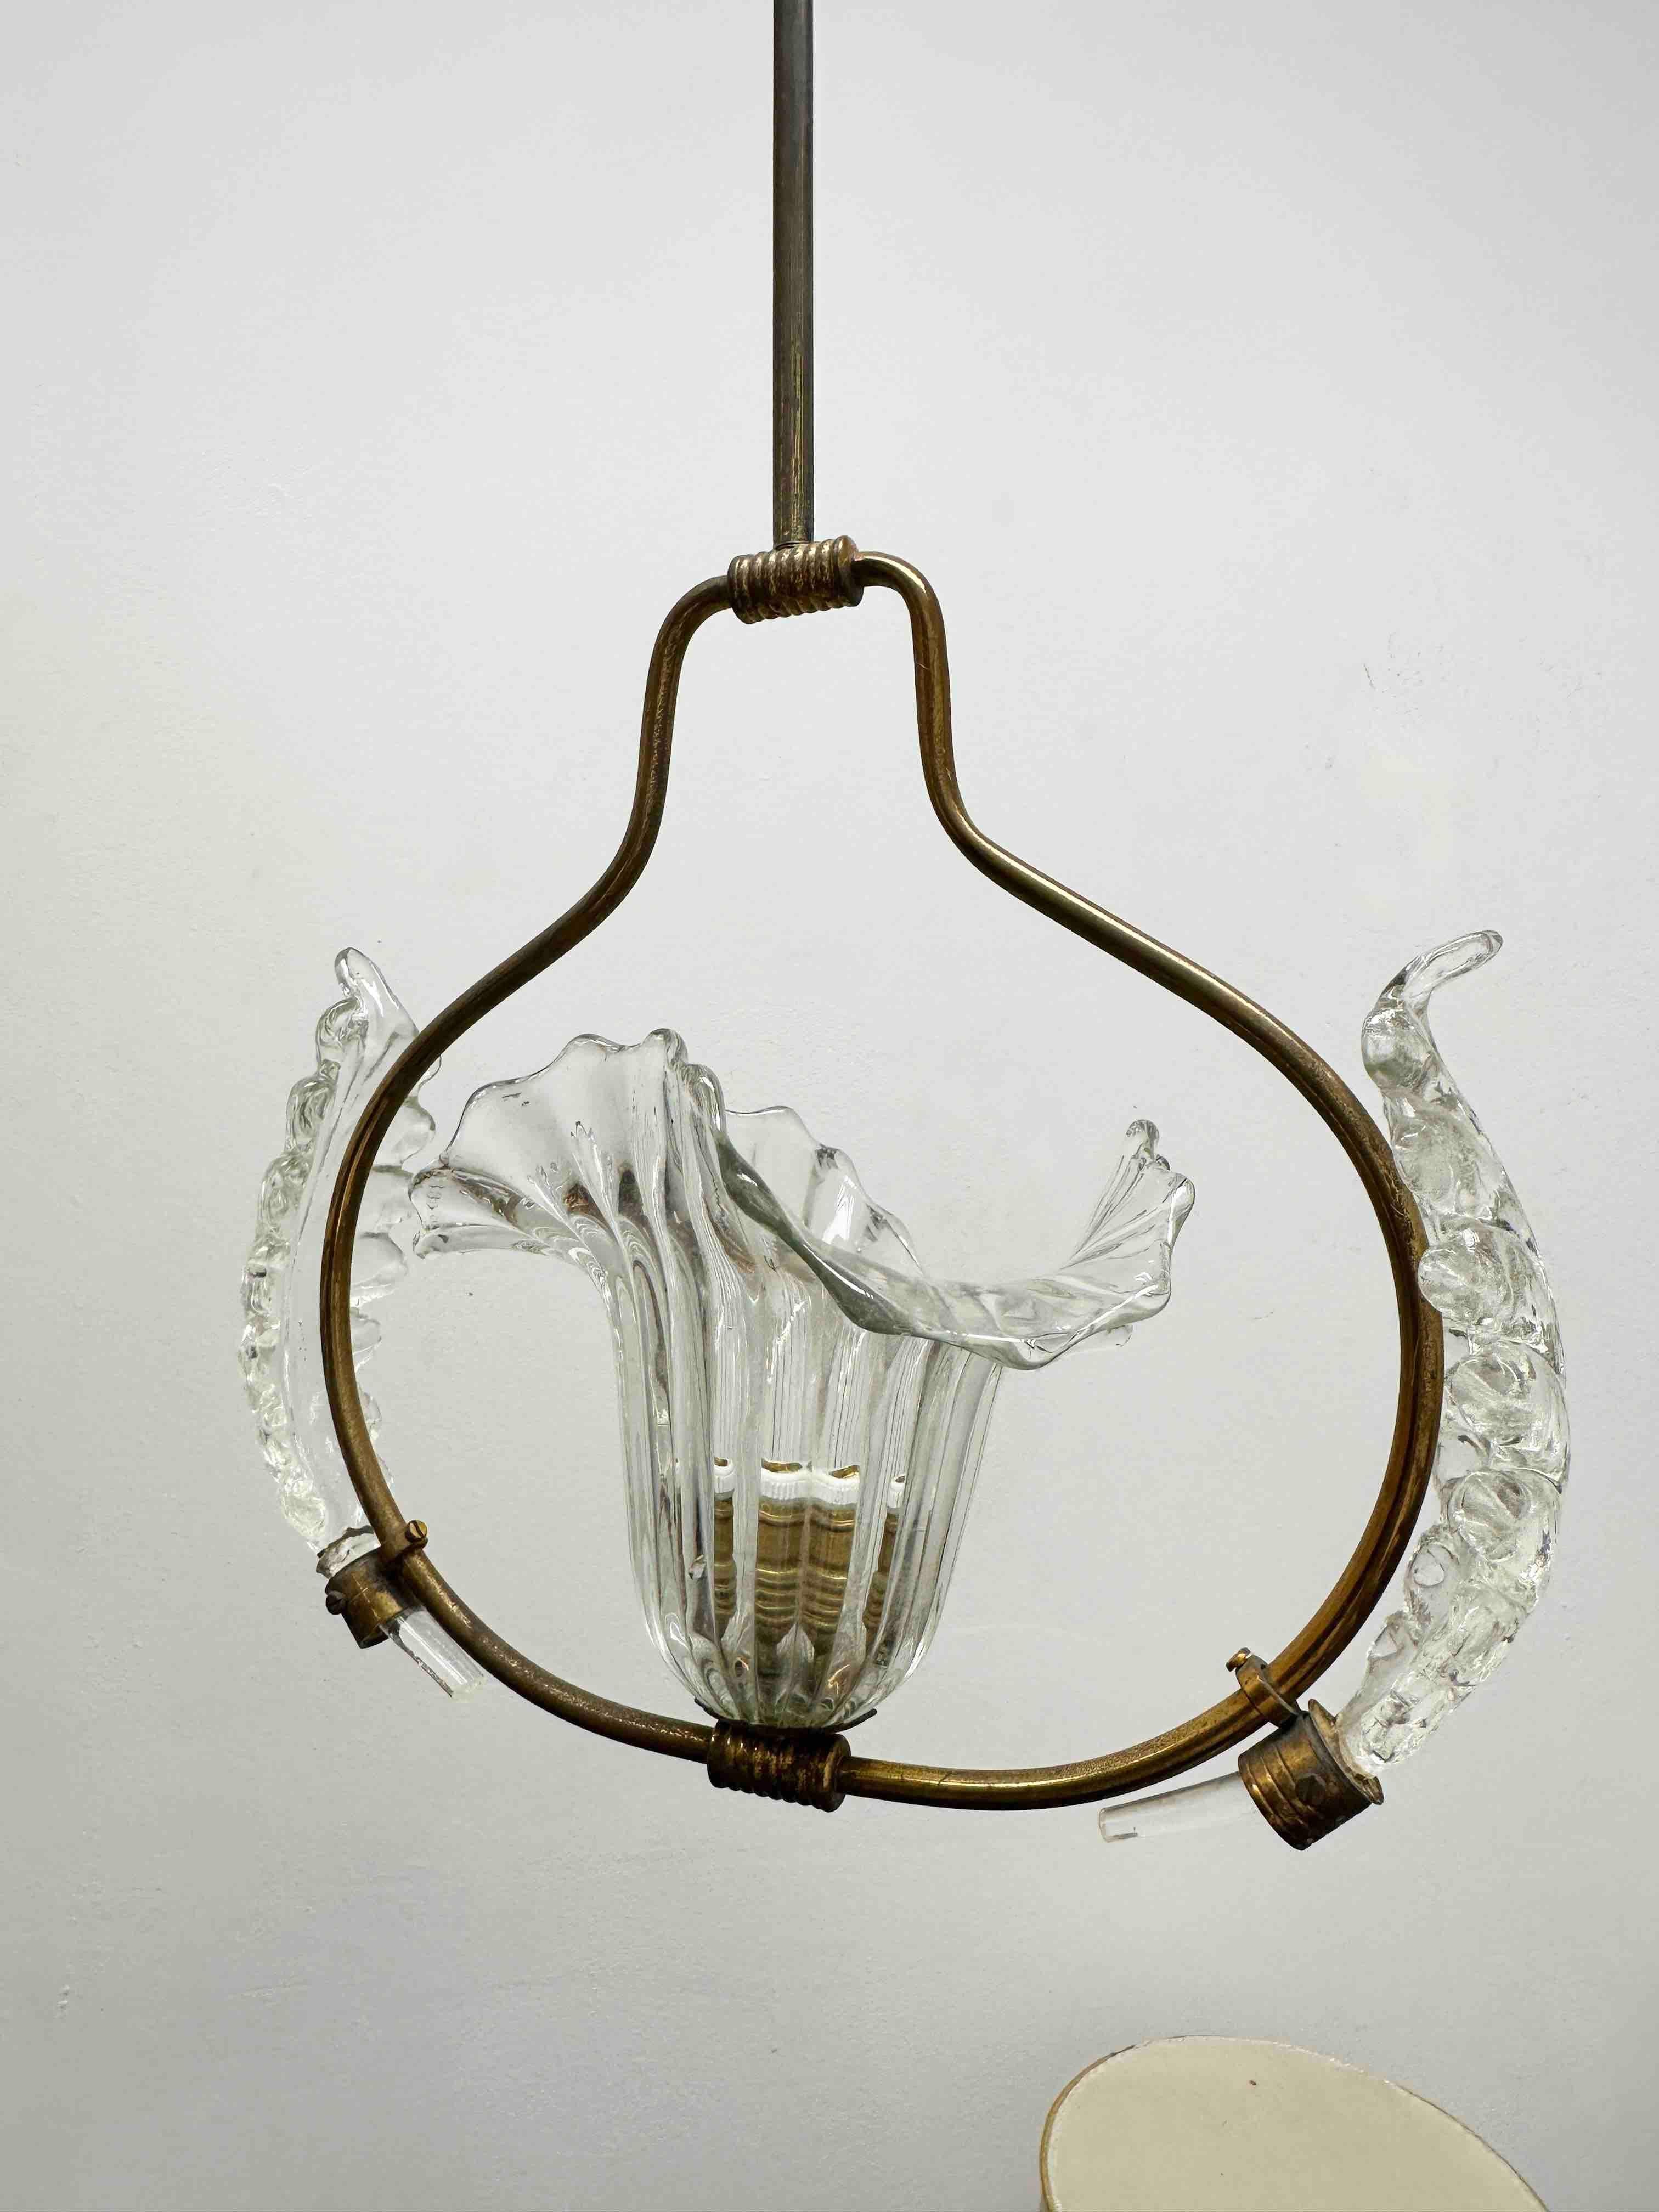 Metal Petite Barovier Toso Pendant Light Chandelier Murano Glass Basket, 1950s For Sale